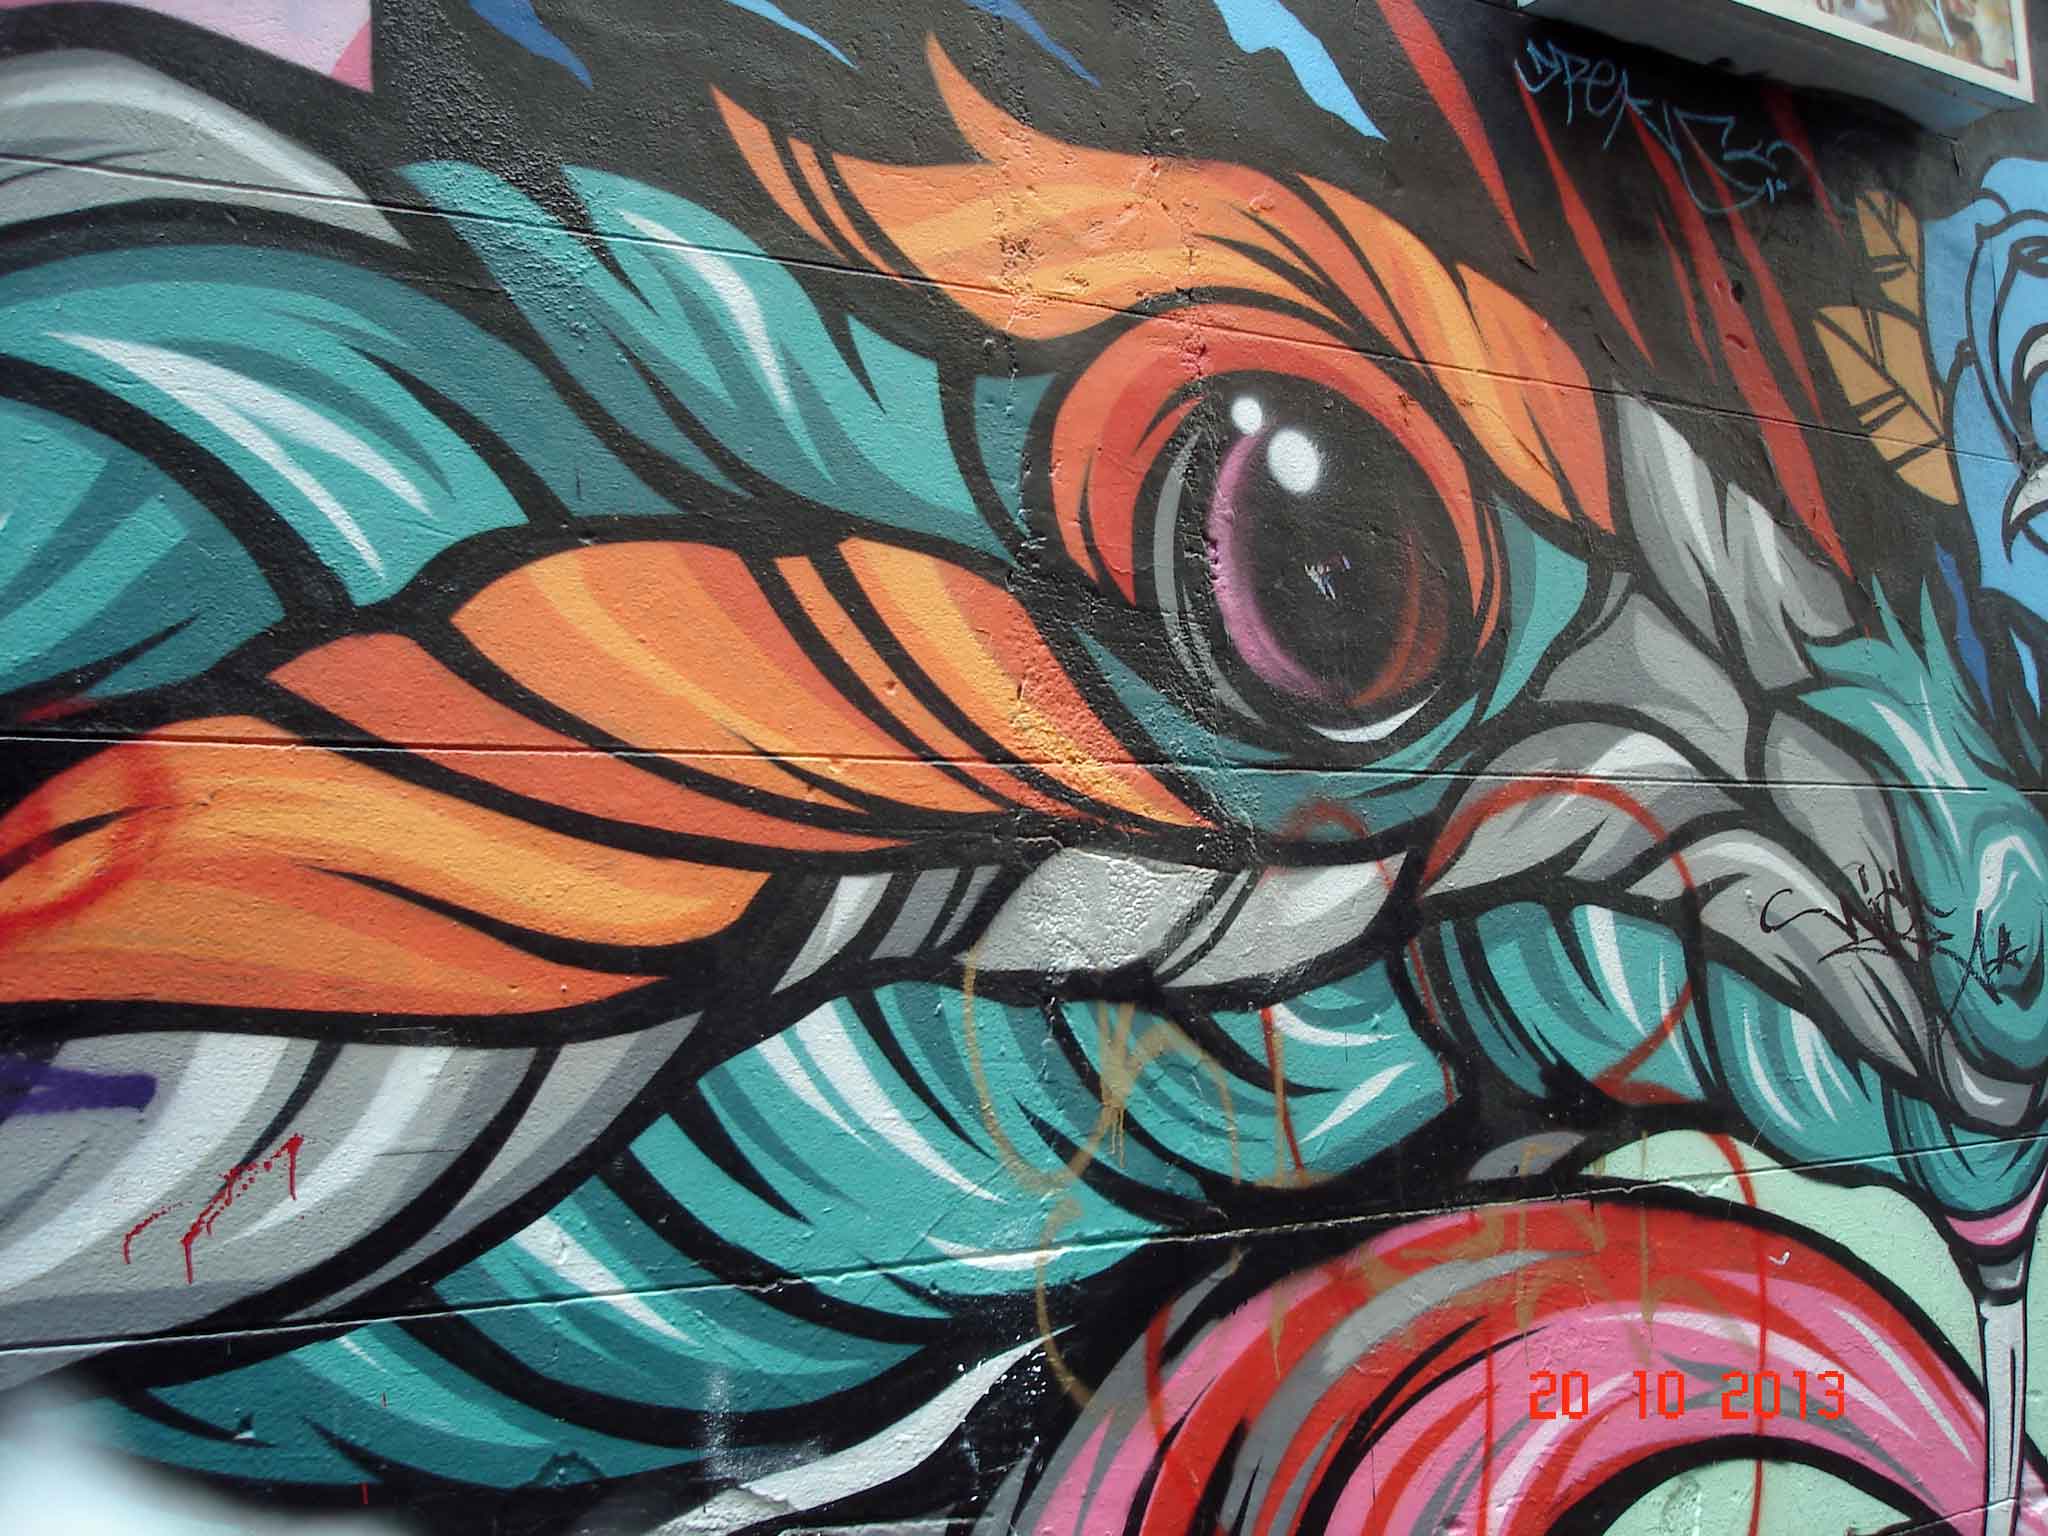 City sightseeing-Hosier Lane Urban Art-Eye of the Pheonix